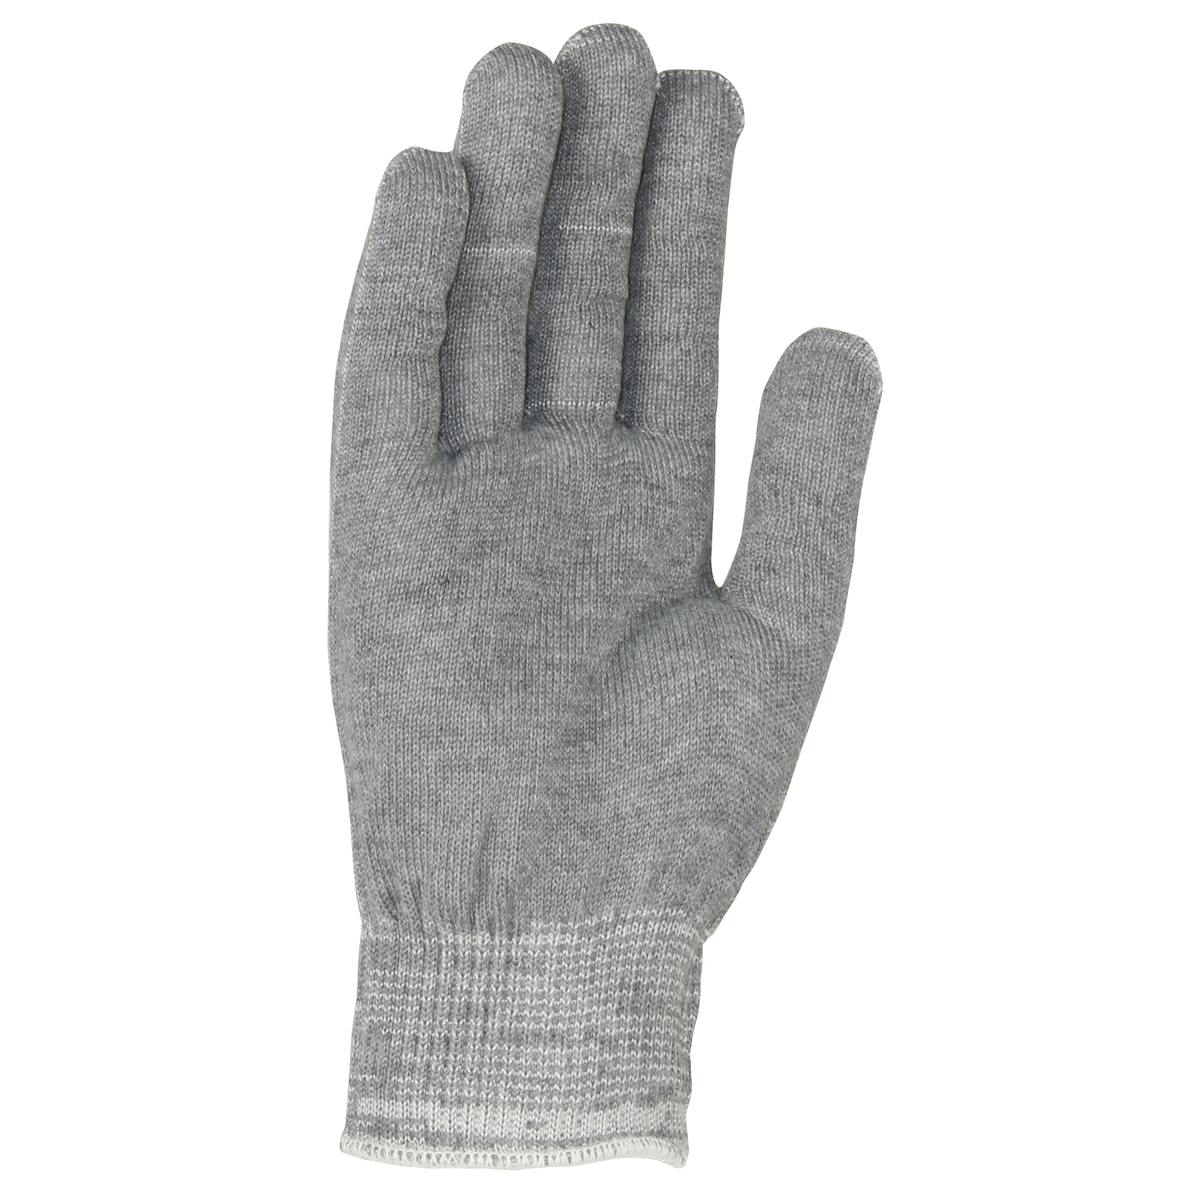 PIP® Seamless Knit ATA® / Nylon Blended Glove - Light Weight (M1840)